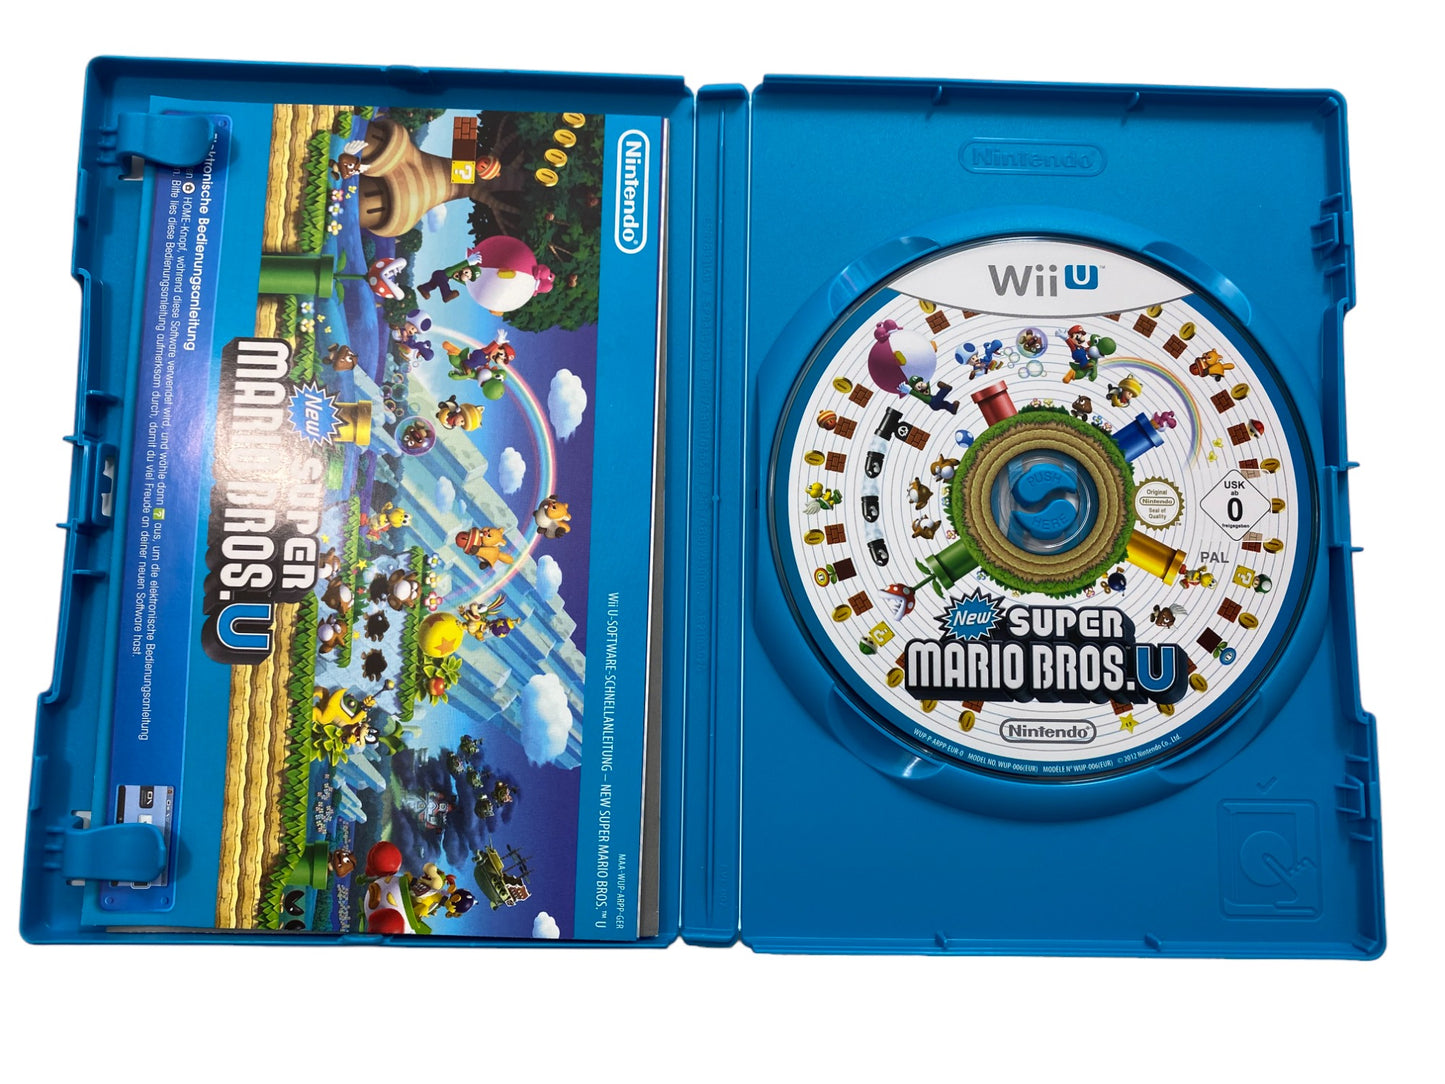 New Super Mario Bros. U - Nintendo Wii U (CD KRATZFREI)